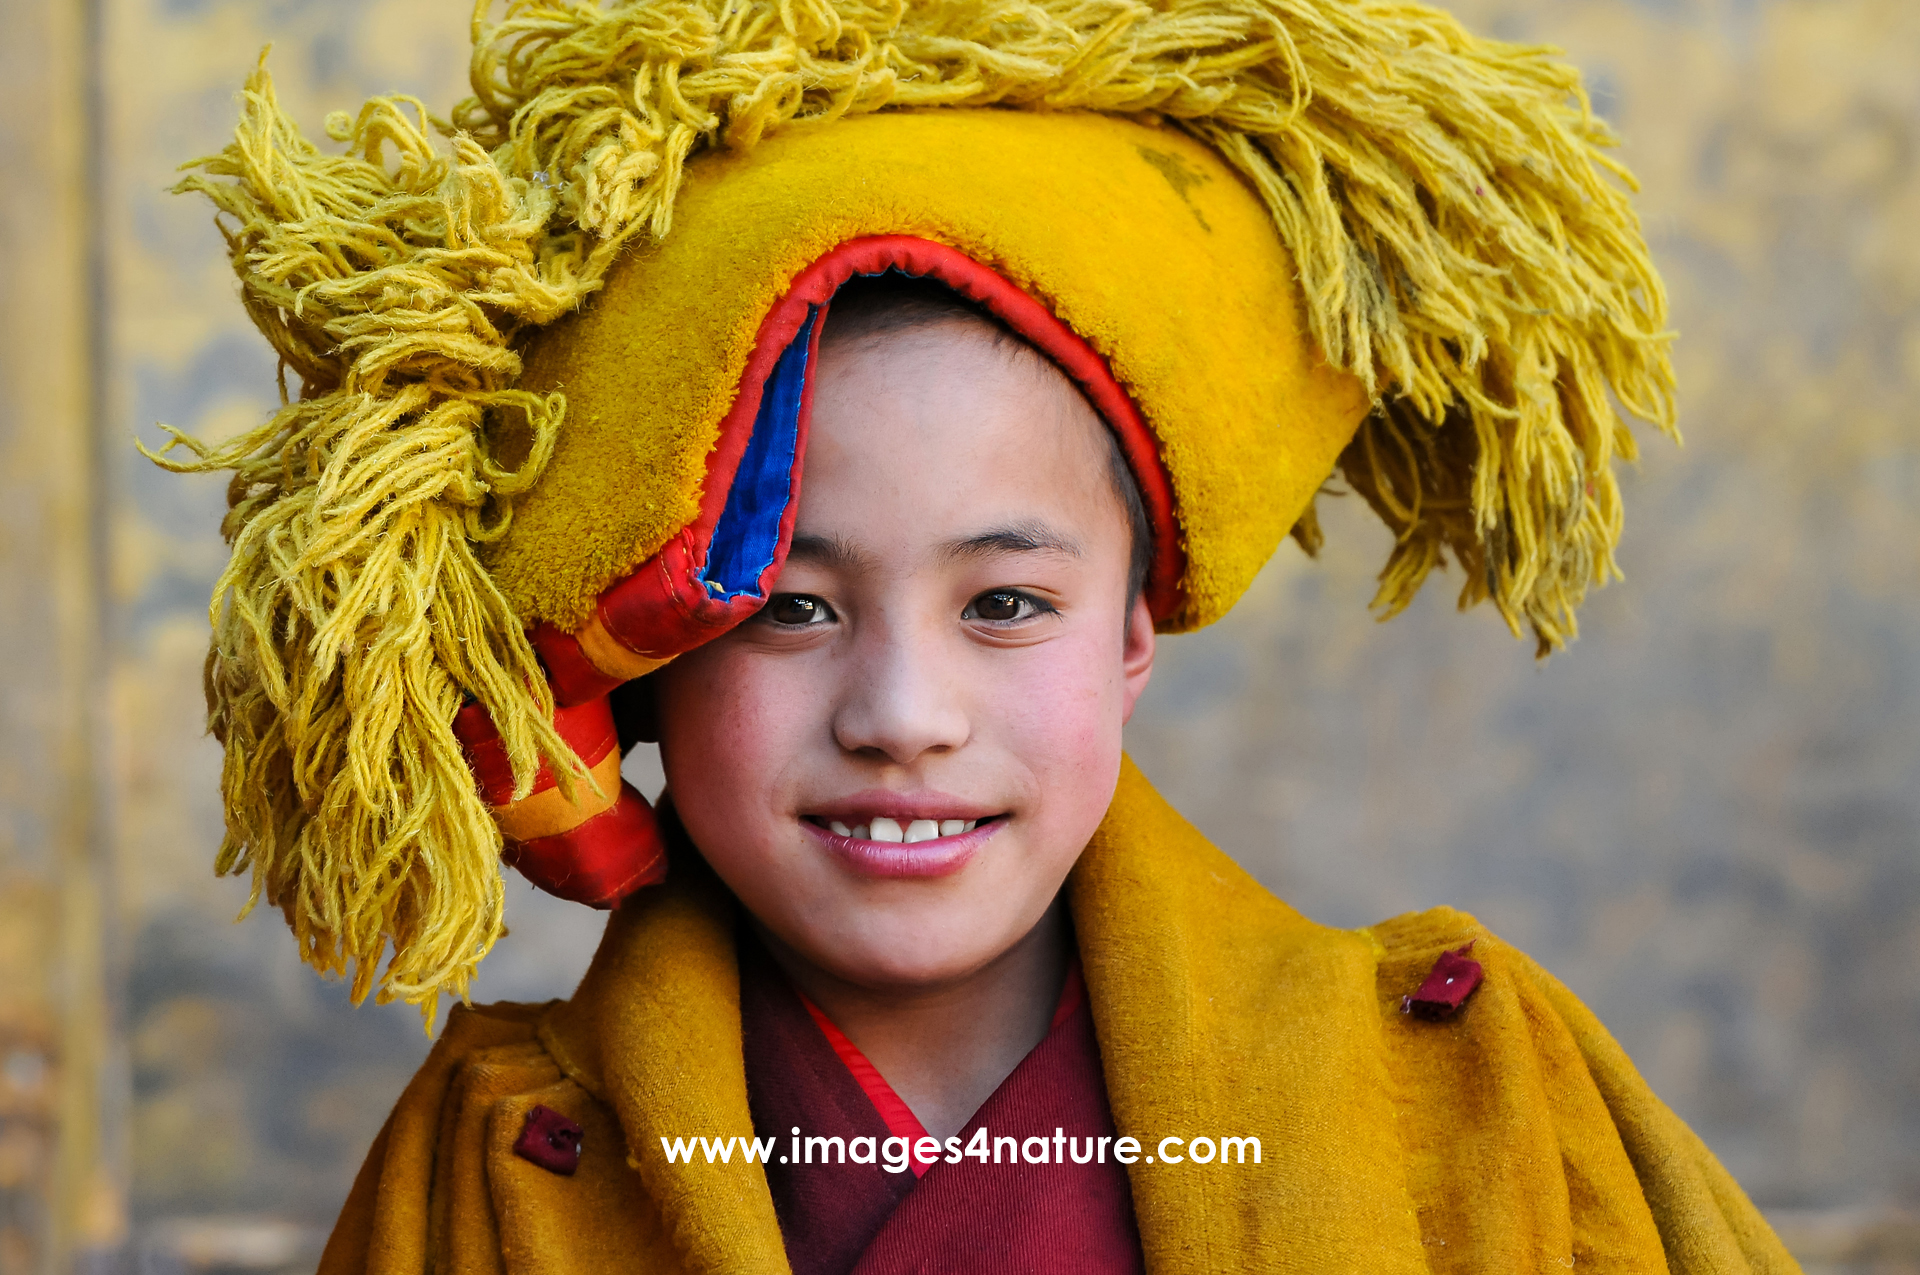 The friendly smile of a young Tibetan novice monk at Tashi Lhunpo monastery